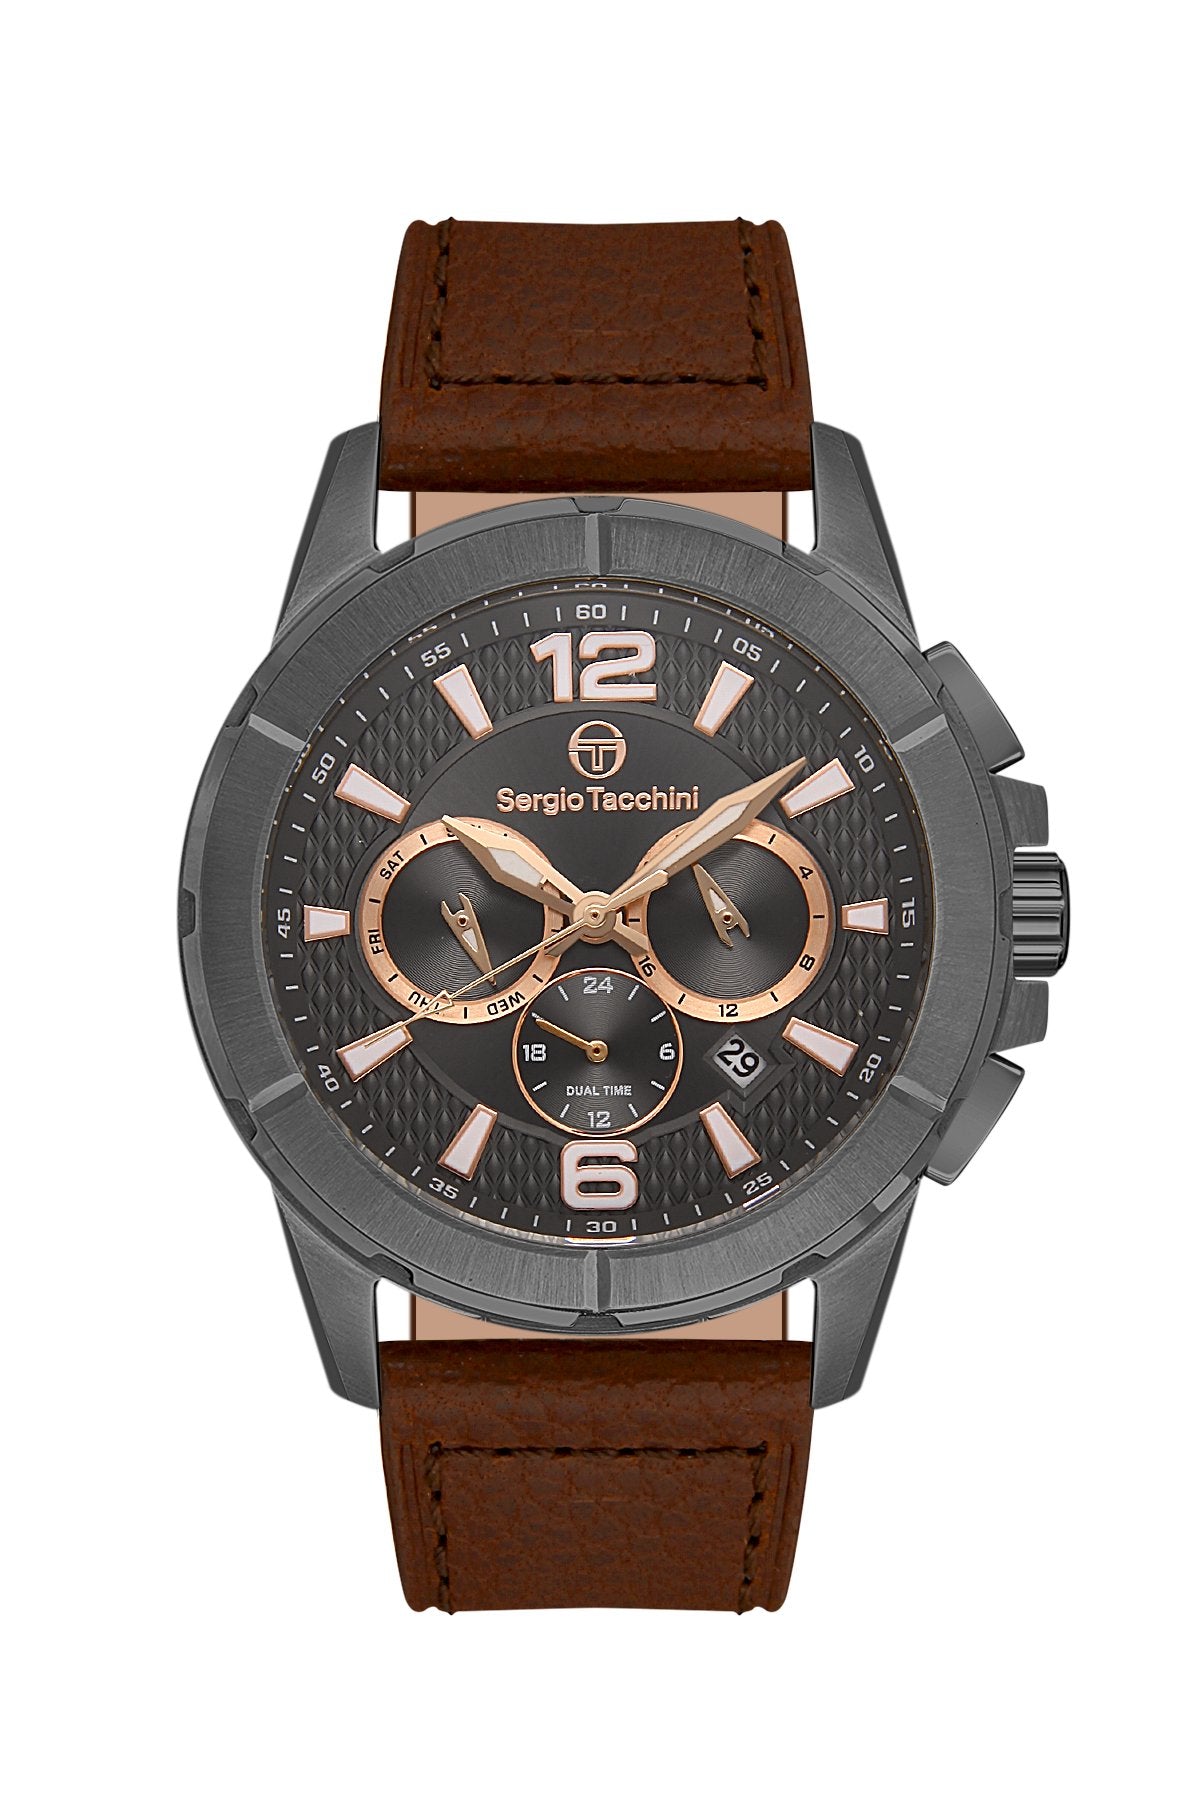 | Sergio Tacchini Men's Watch ST.1.10402-3 - Takreem Style | - #sho| Sergio Tacchini Men's Watch ST.1.10402-3 - Takreem Style |p_name#| Sergio Tacchini Men's Watch ST.1.10402-3 - Takreem Style |WatchSergio TacchiniTakreem.joST.1.10402-38682308152807BrownLeatherMen| Sergio Tacchini Men's Watch ST.1.10402-3 - Takreem Style |